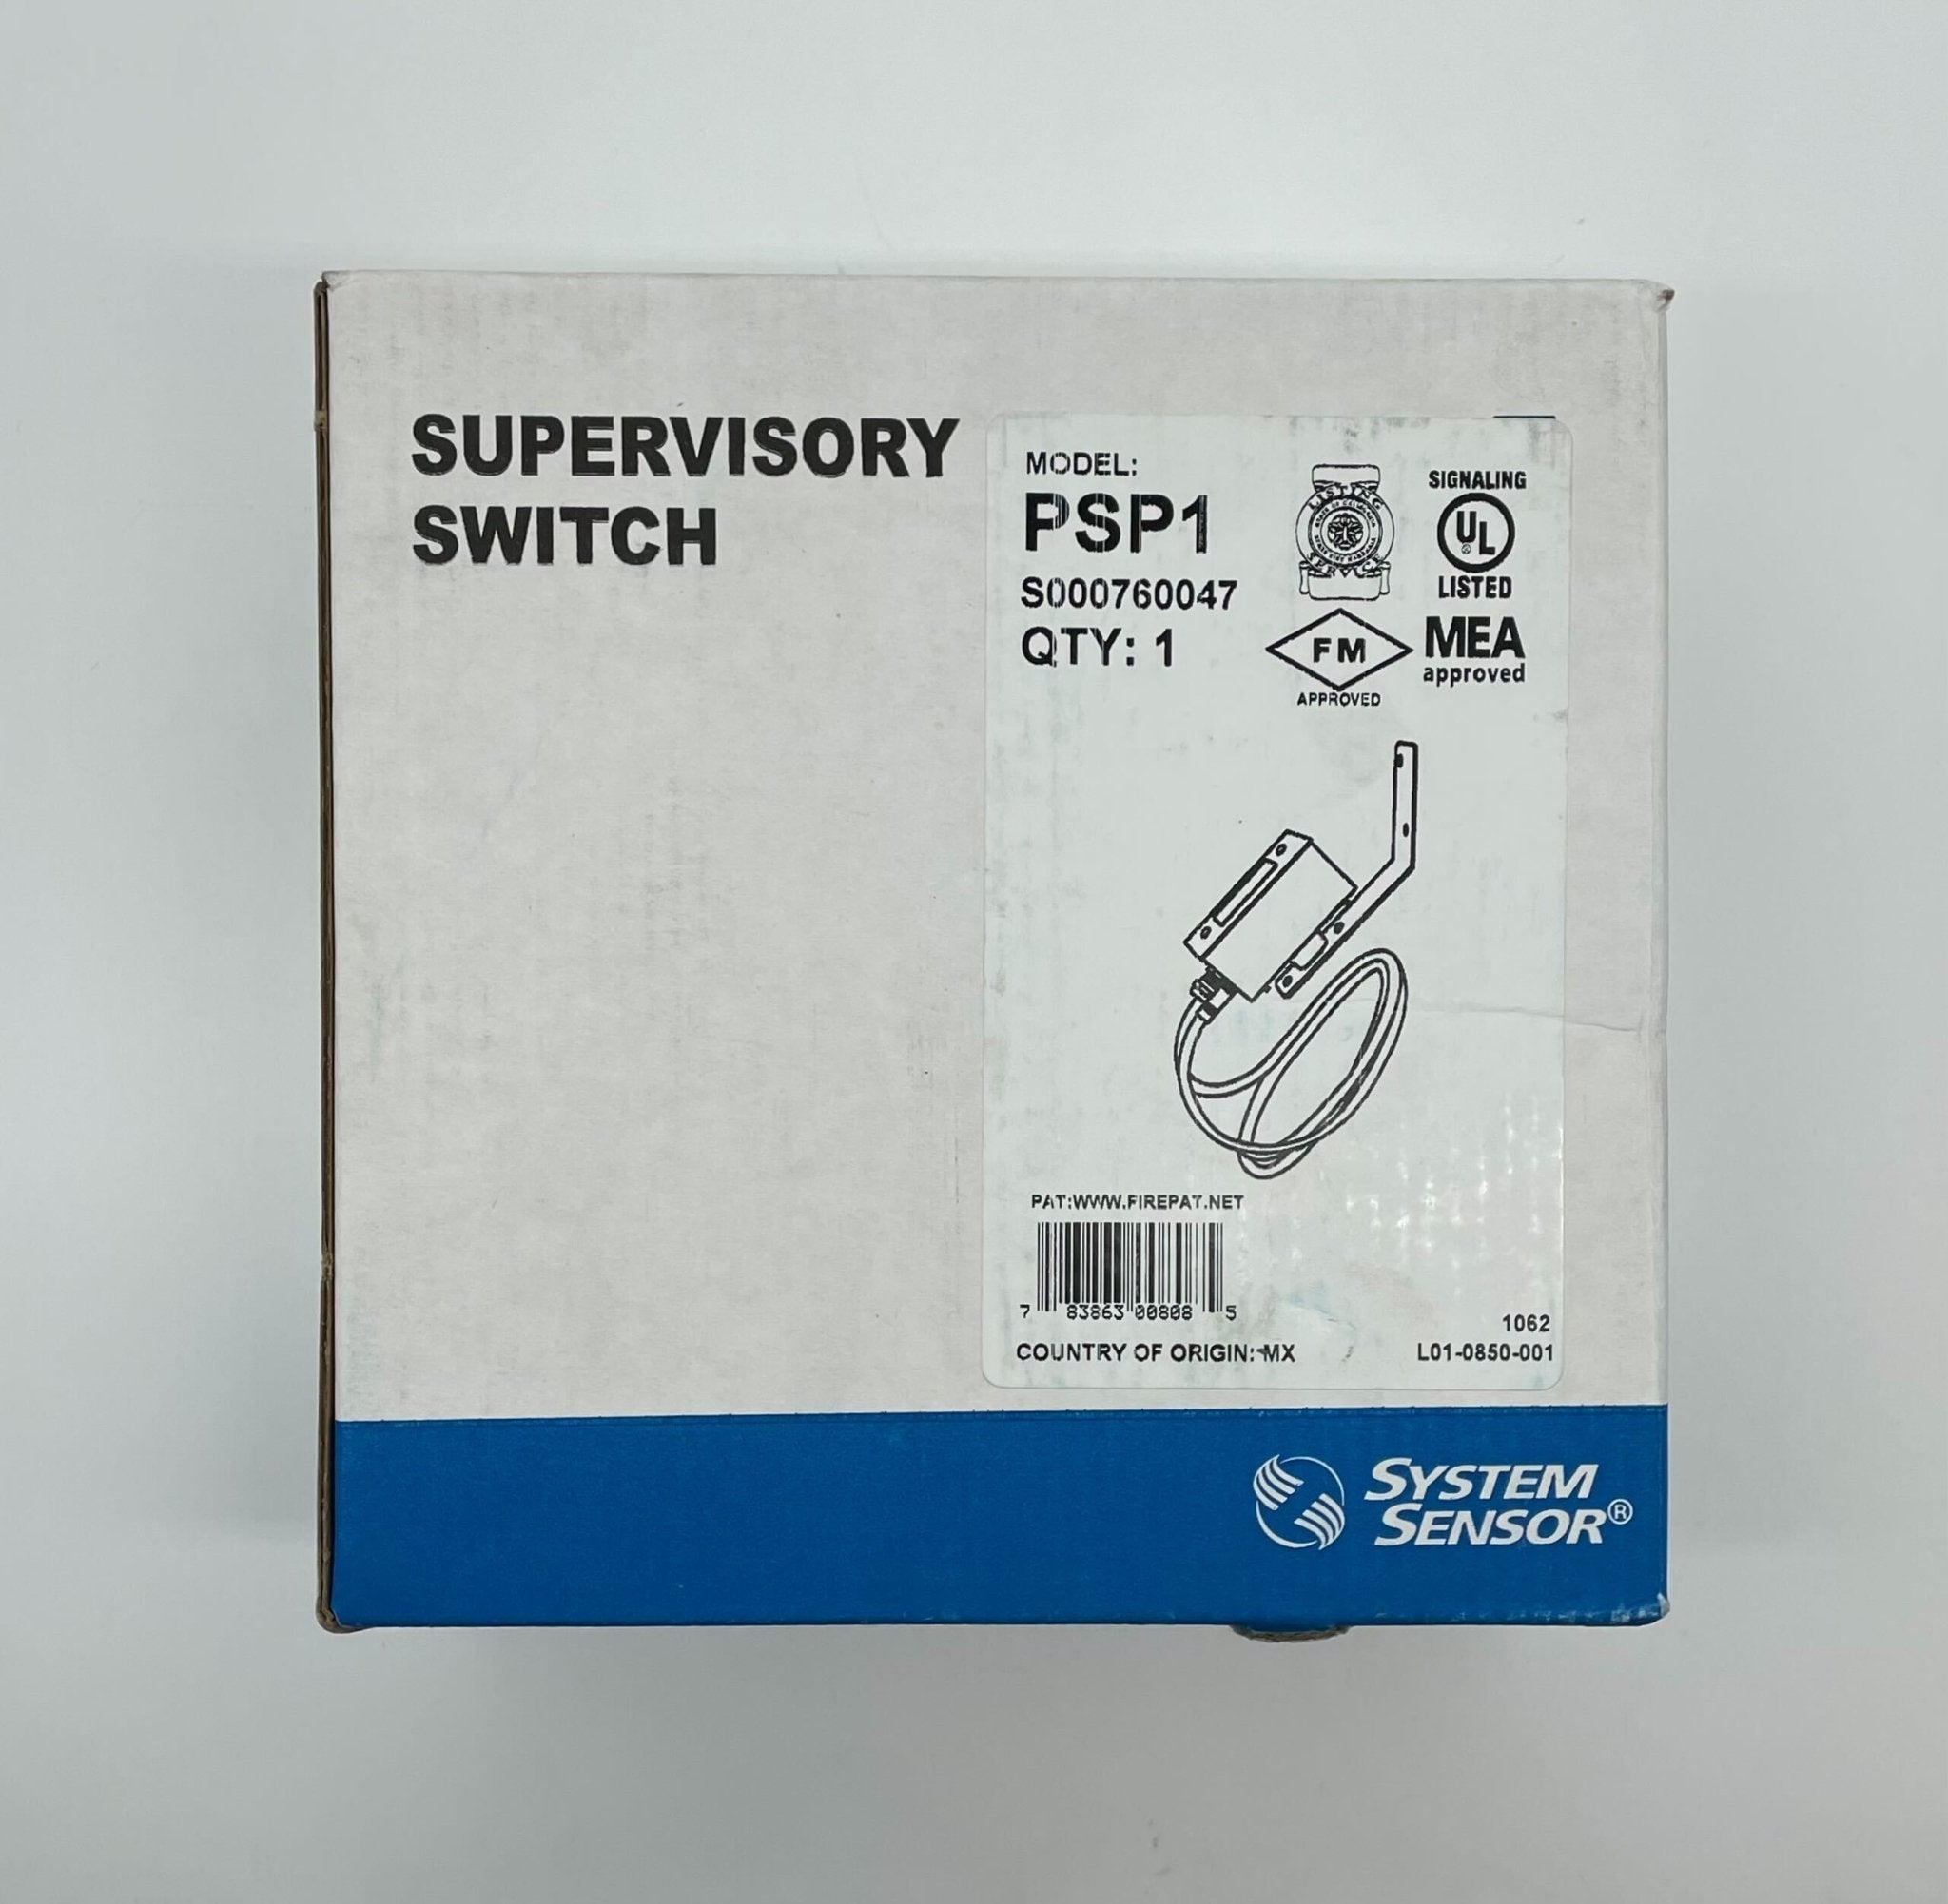 System Sensor PSP1 Supervisory Switch - The Fire Alarm Supplier